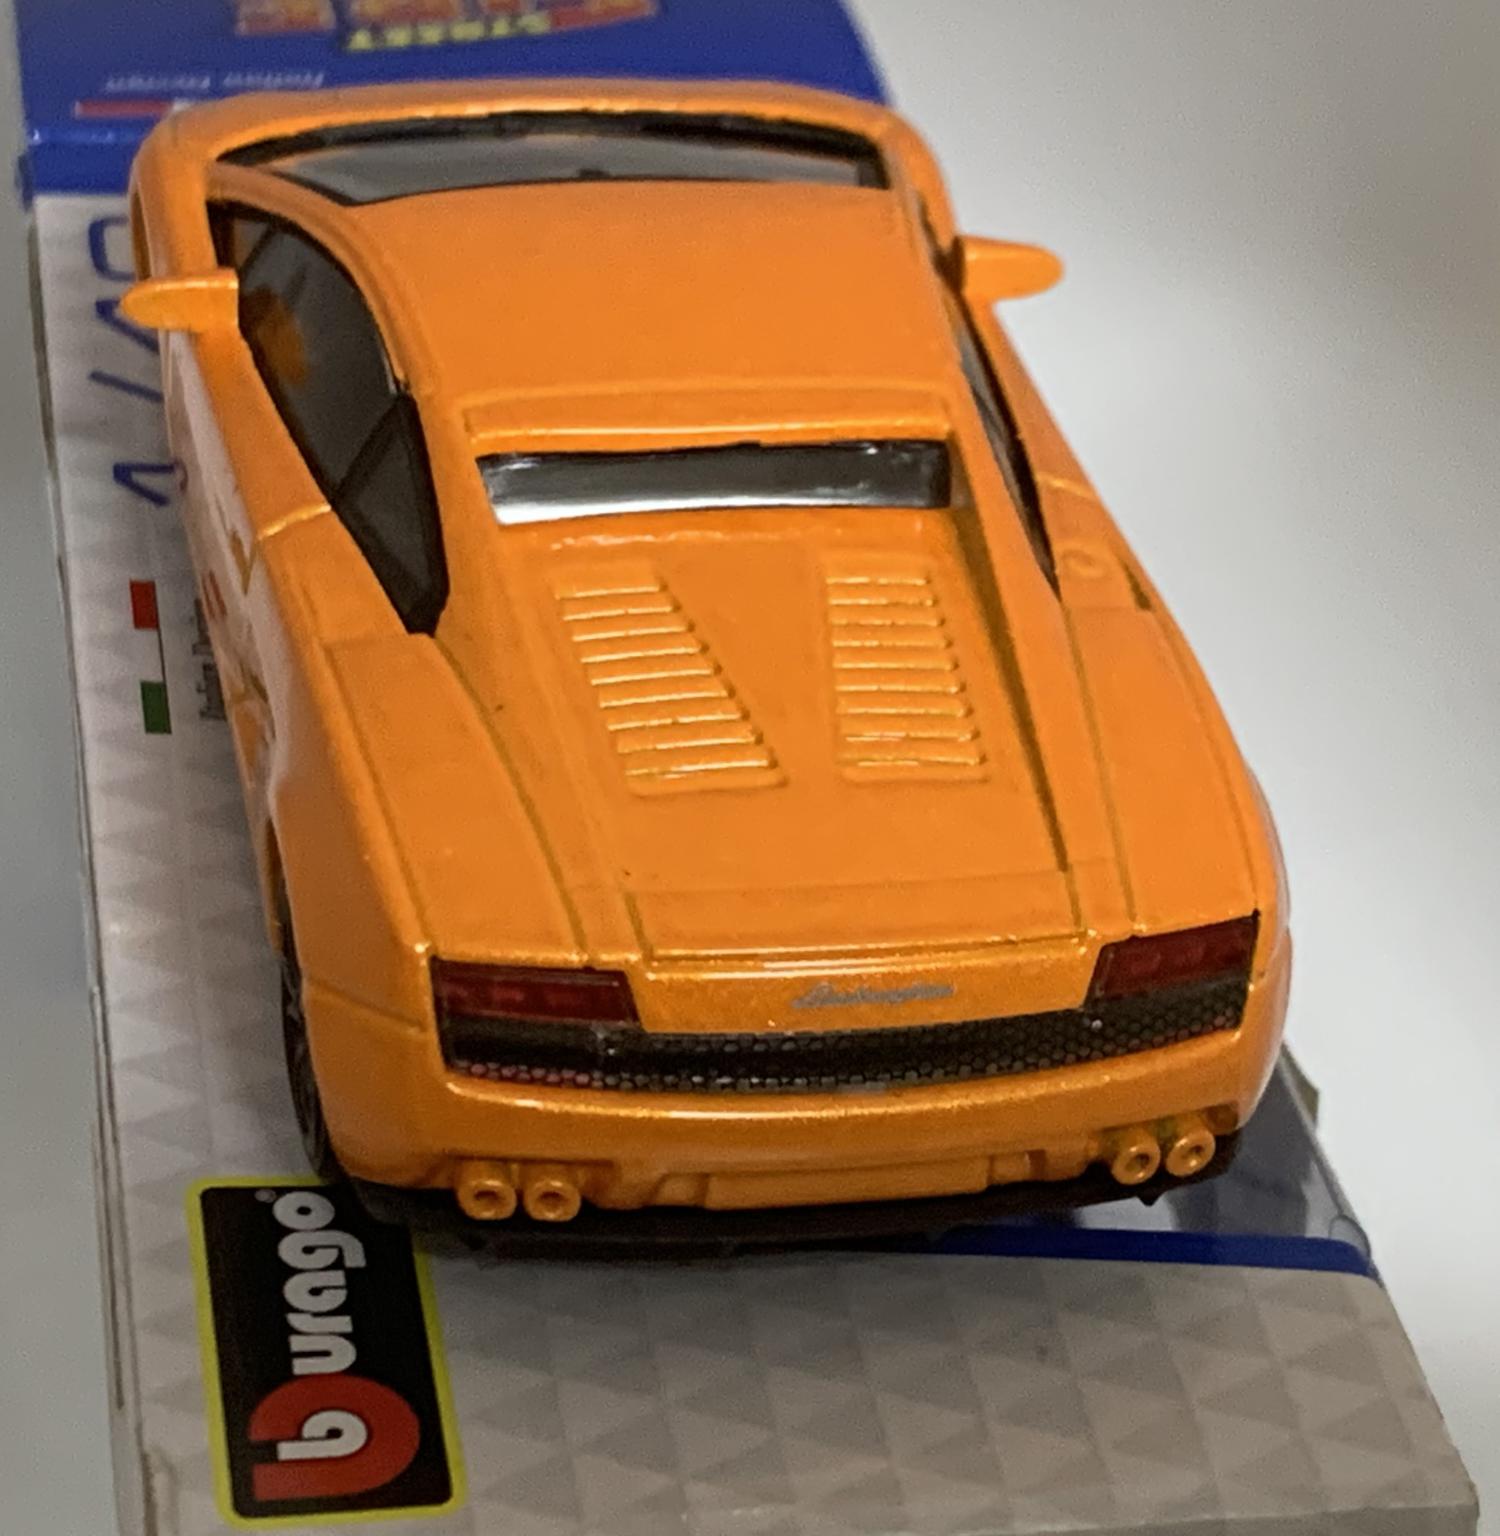 Lamborghini Gallardo LP 560-4 , metallic orange 1:43 scale model, Bburago